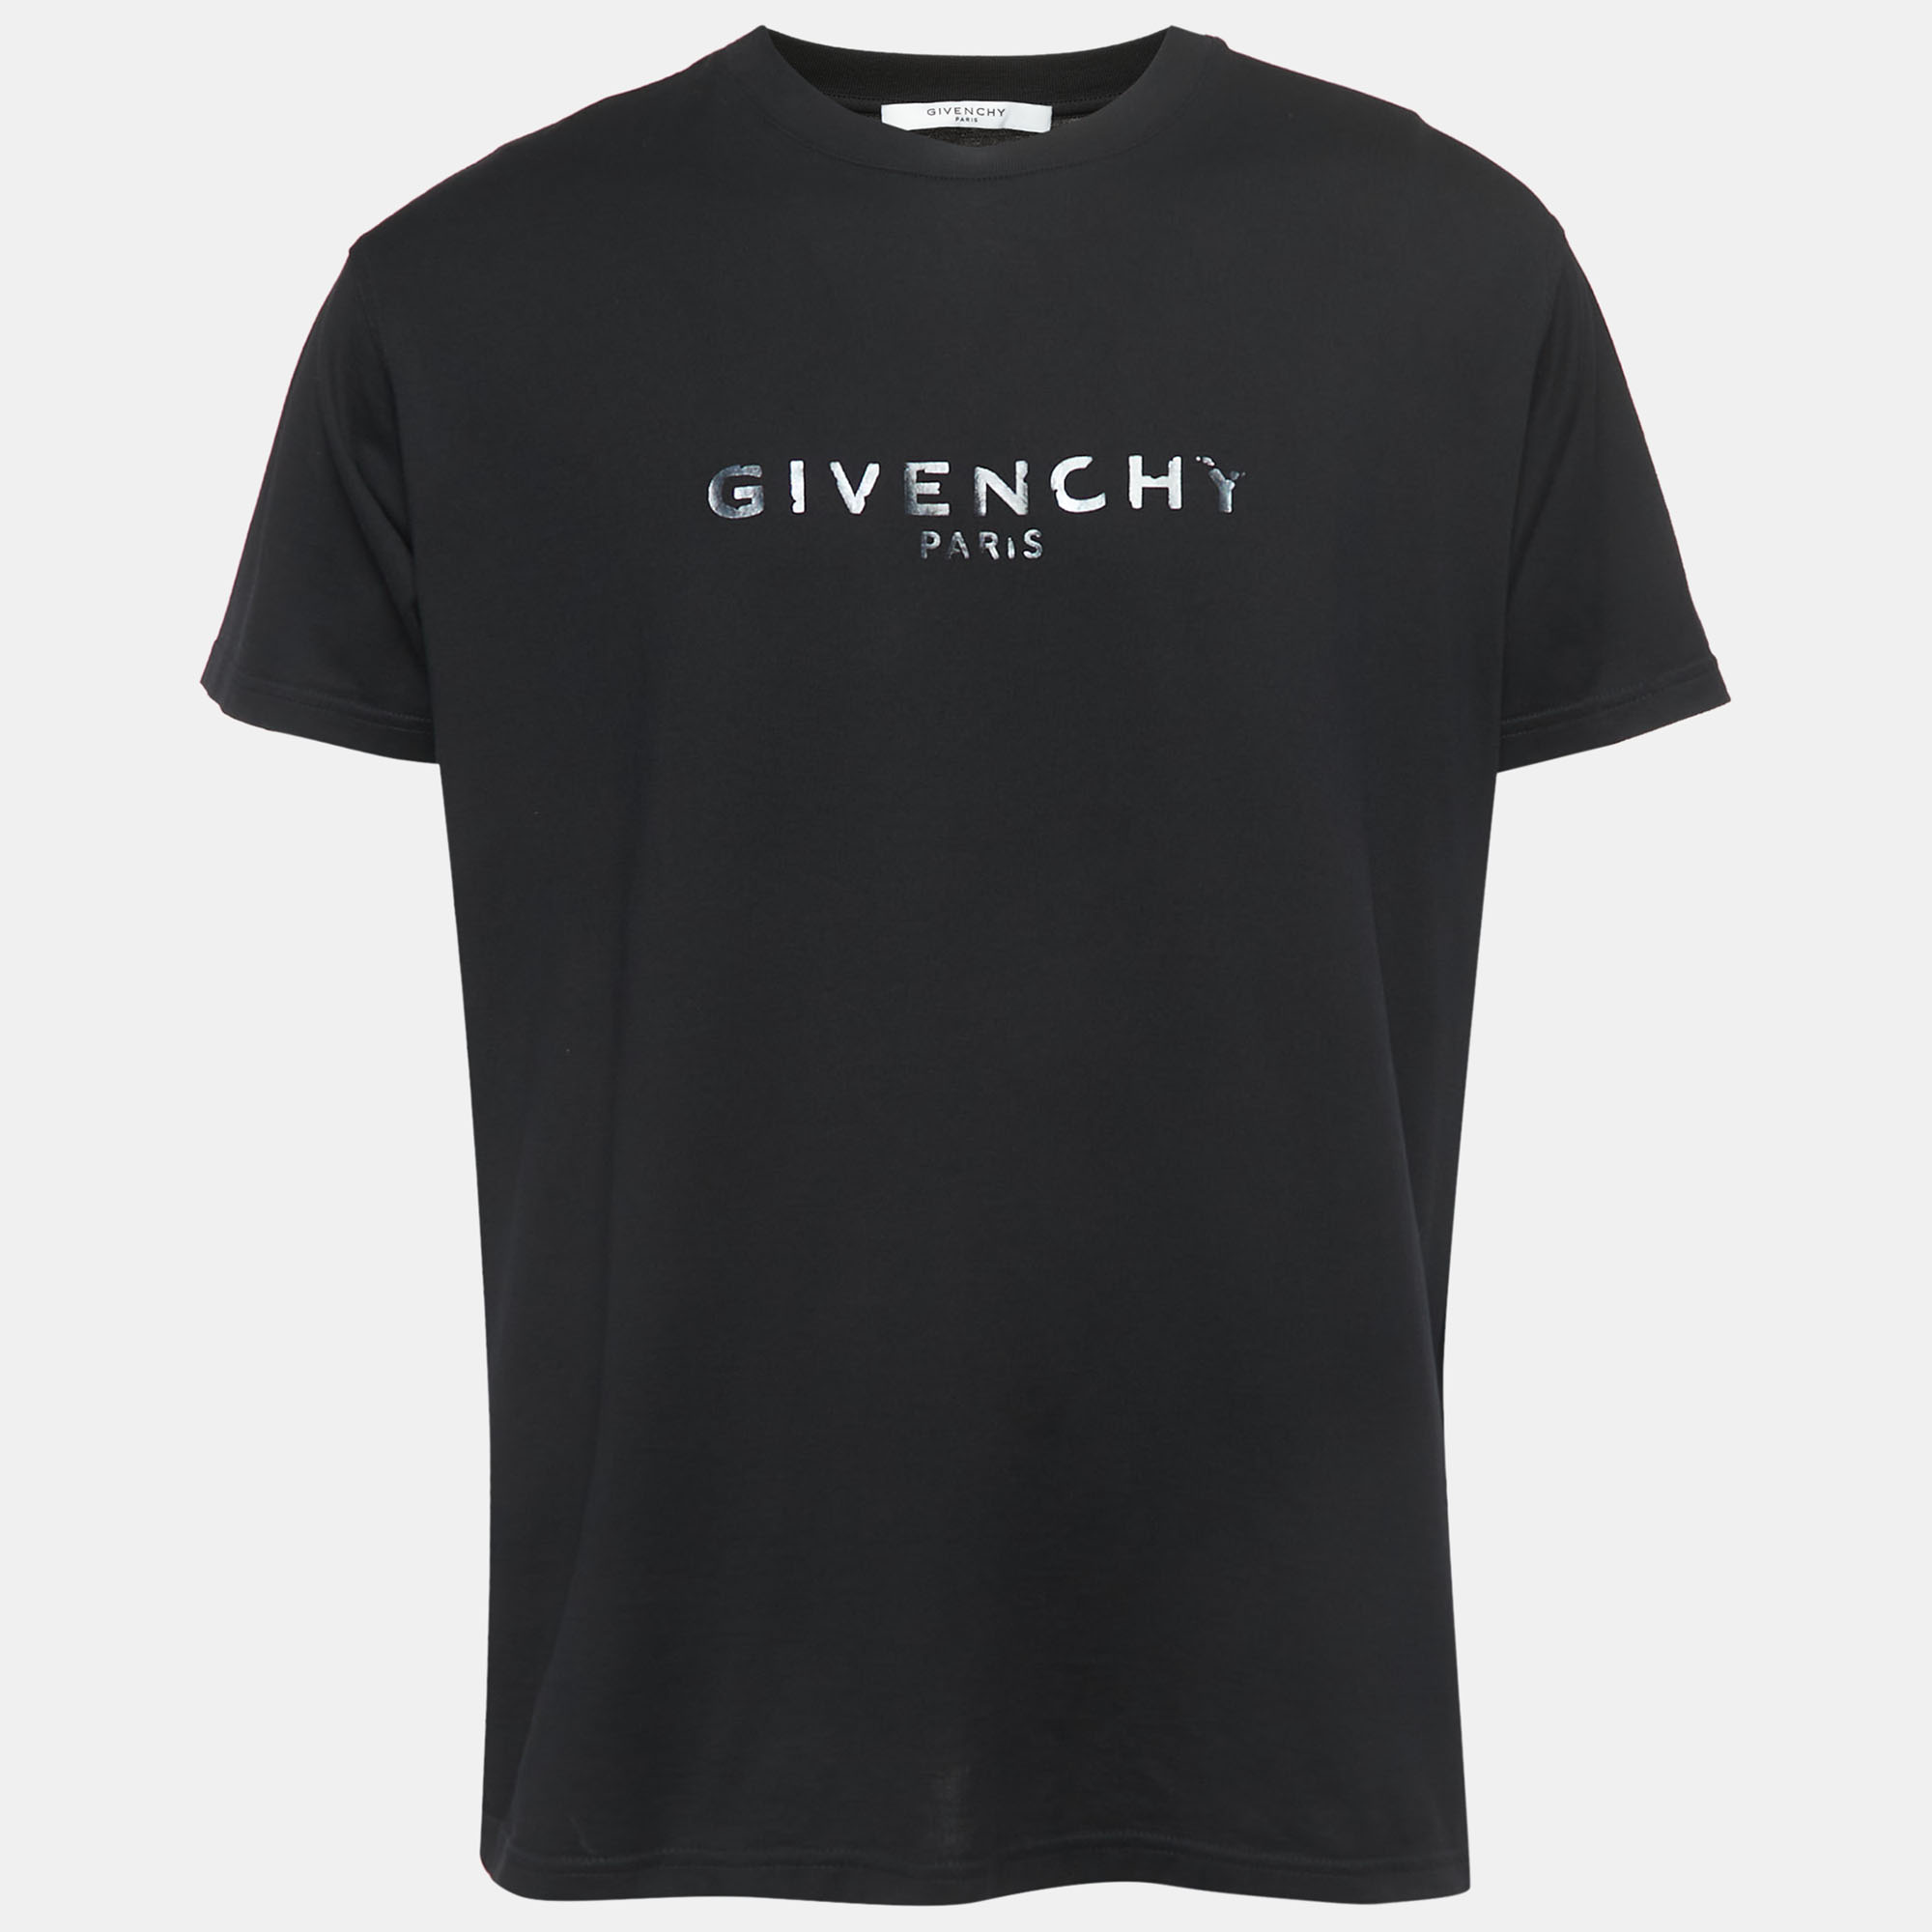 Givenchy black logo print cotton oversized t-shirt s